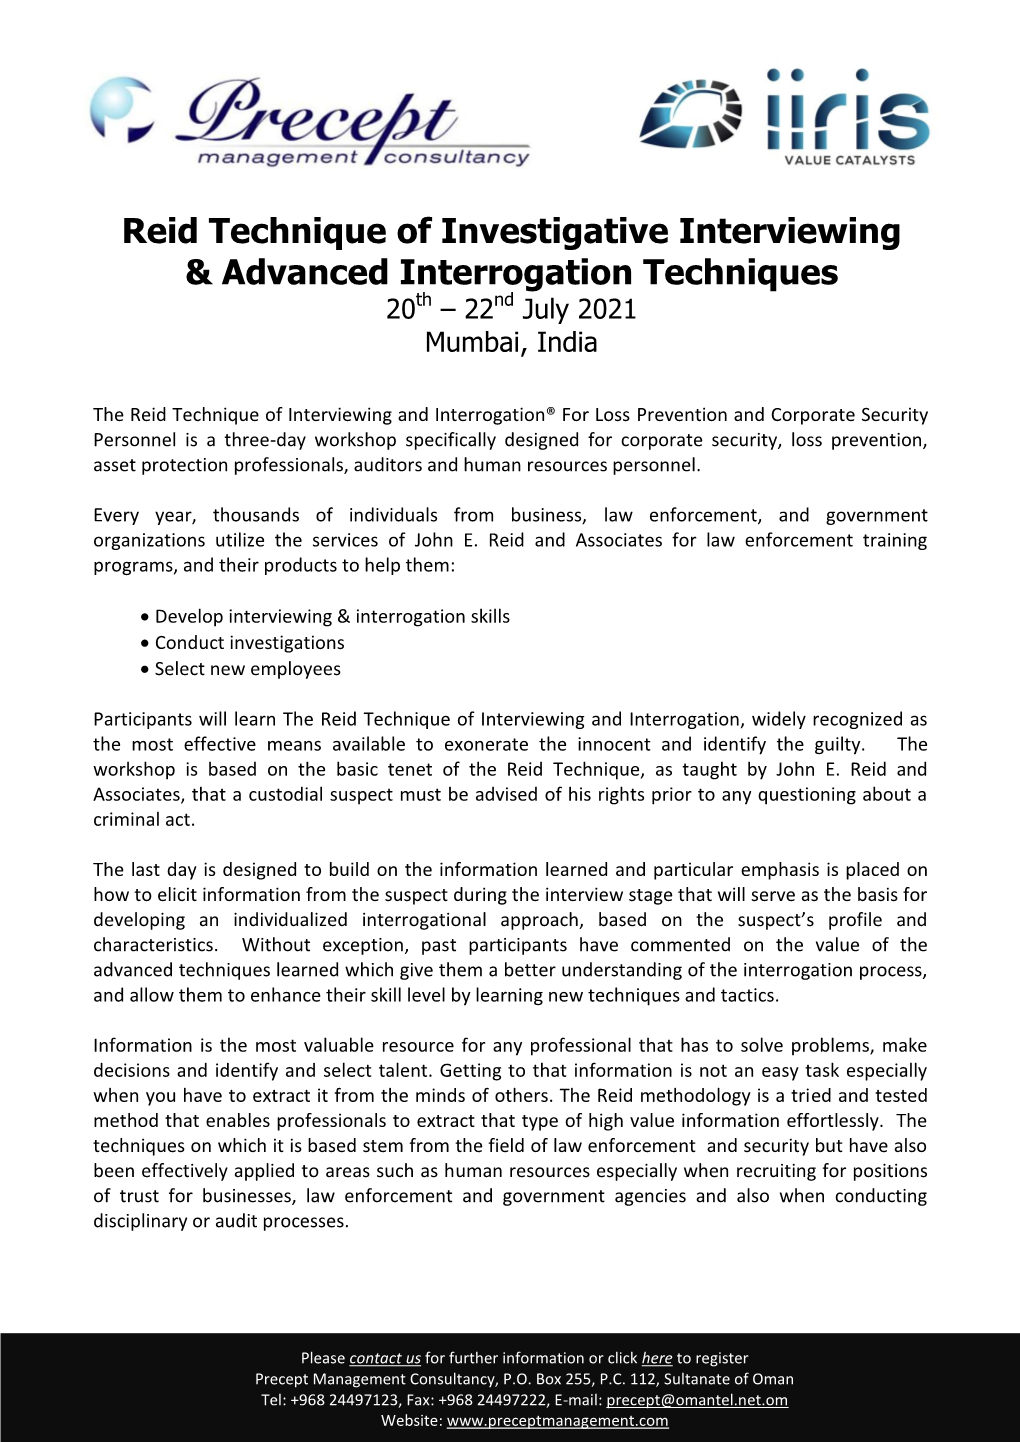 Reid Technique of Investigative Interviewing & Advanced Interrogation Techniques